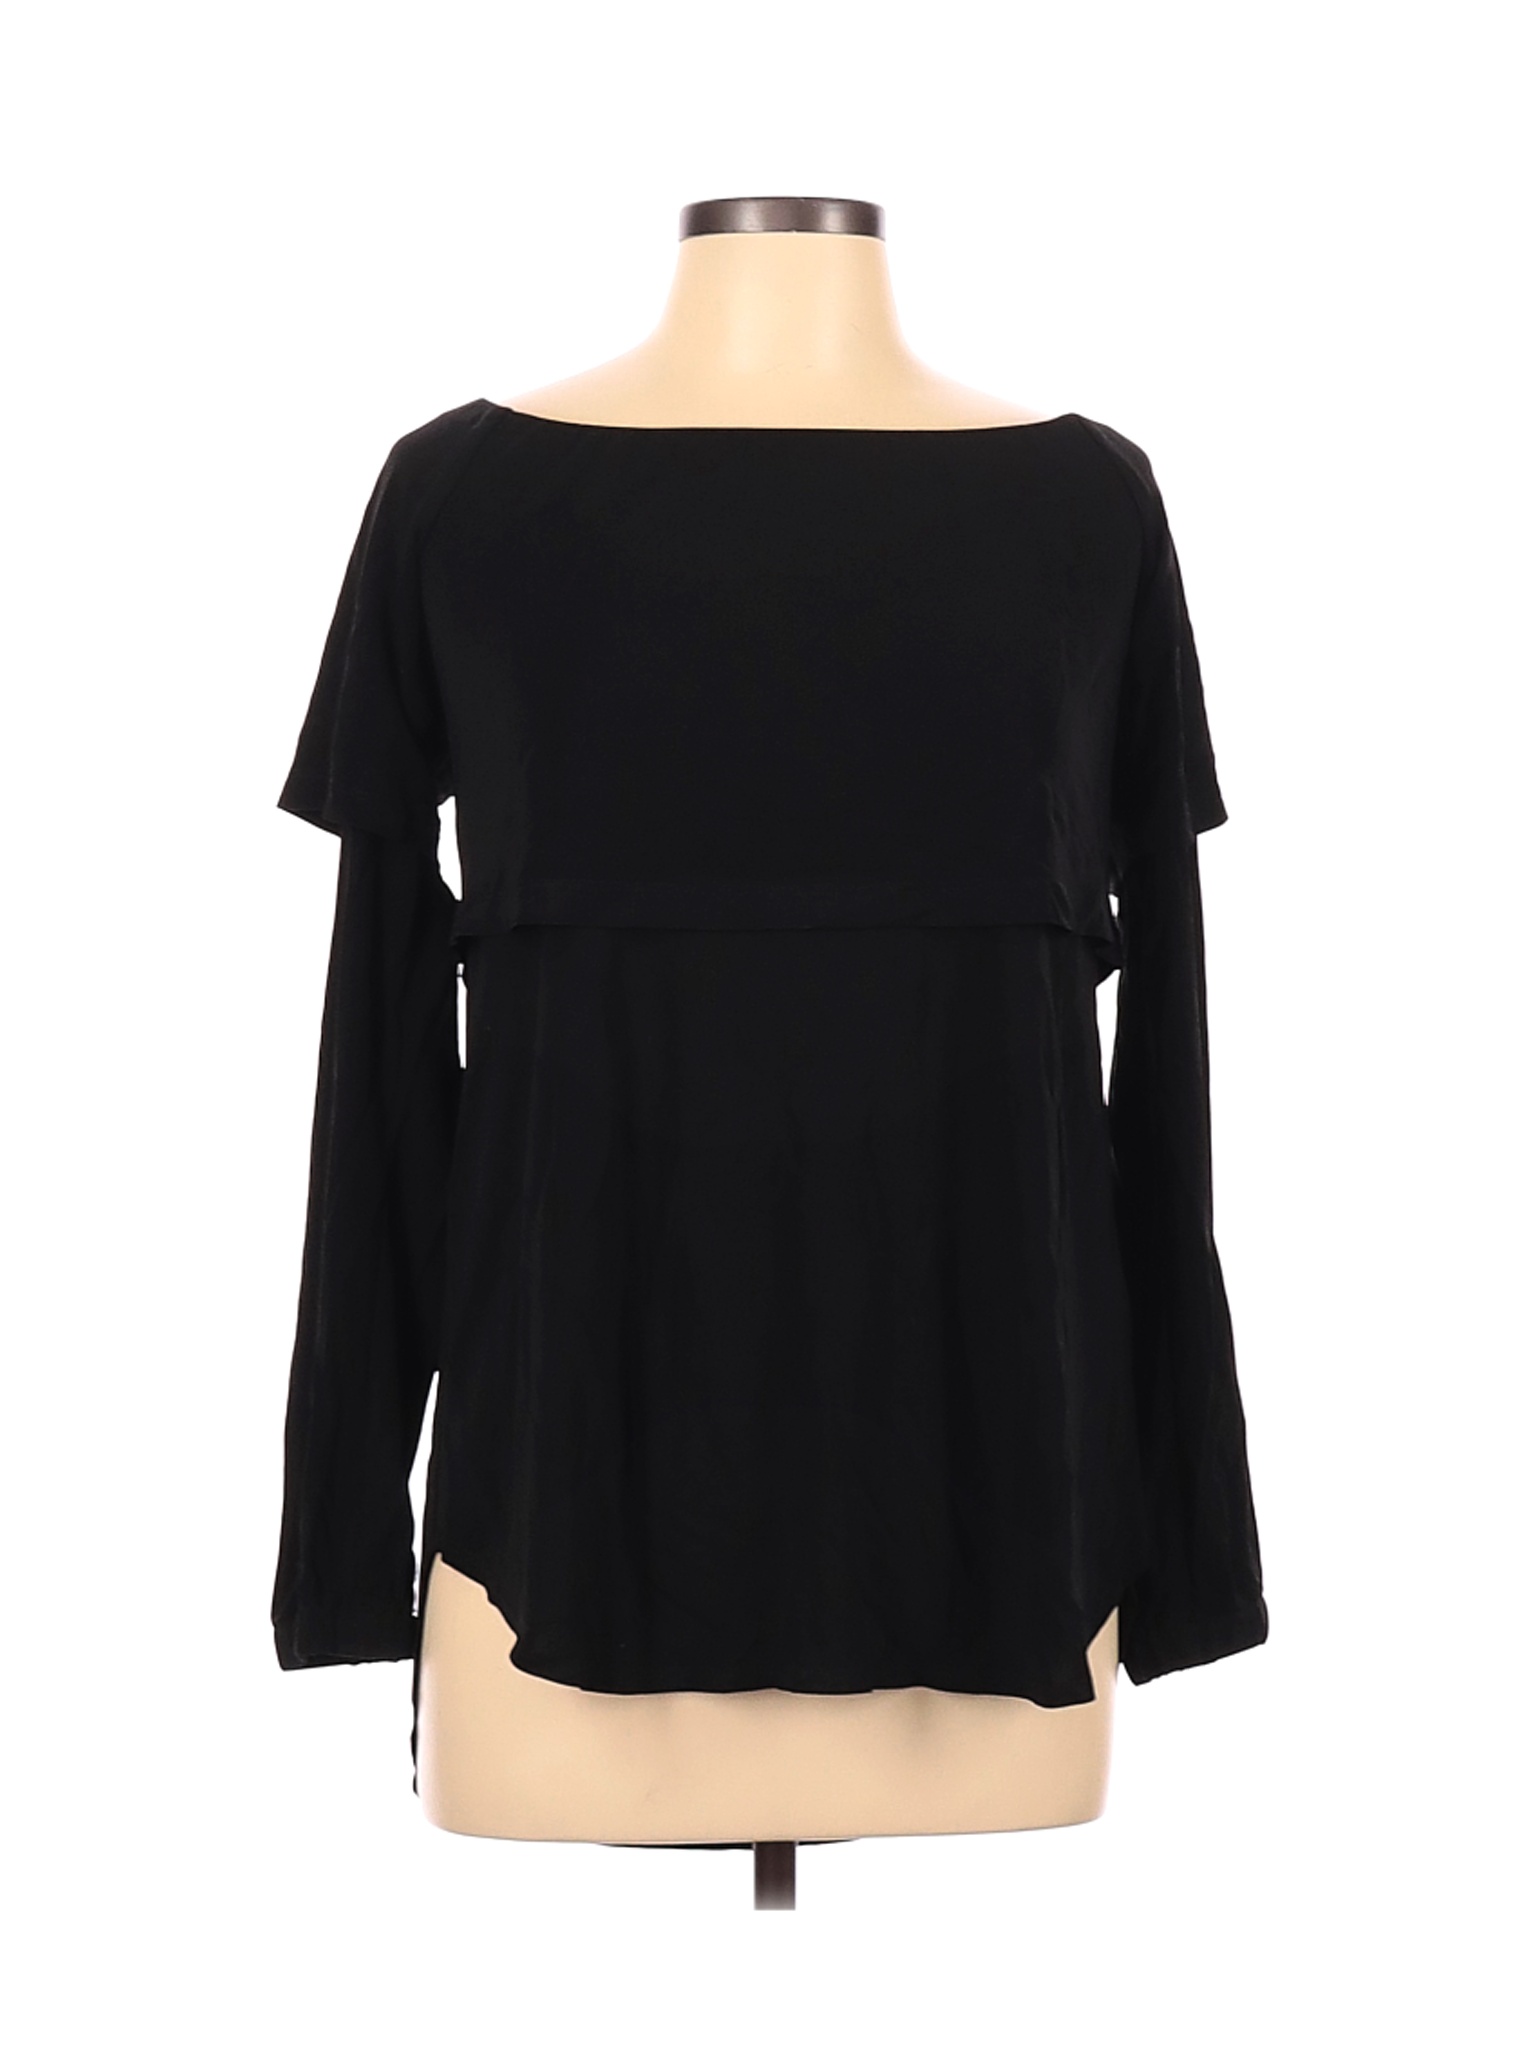 DKNY Women Black Long Sleeve Top L | eBay